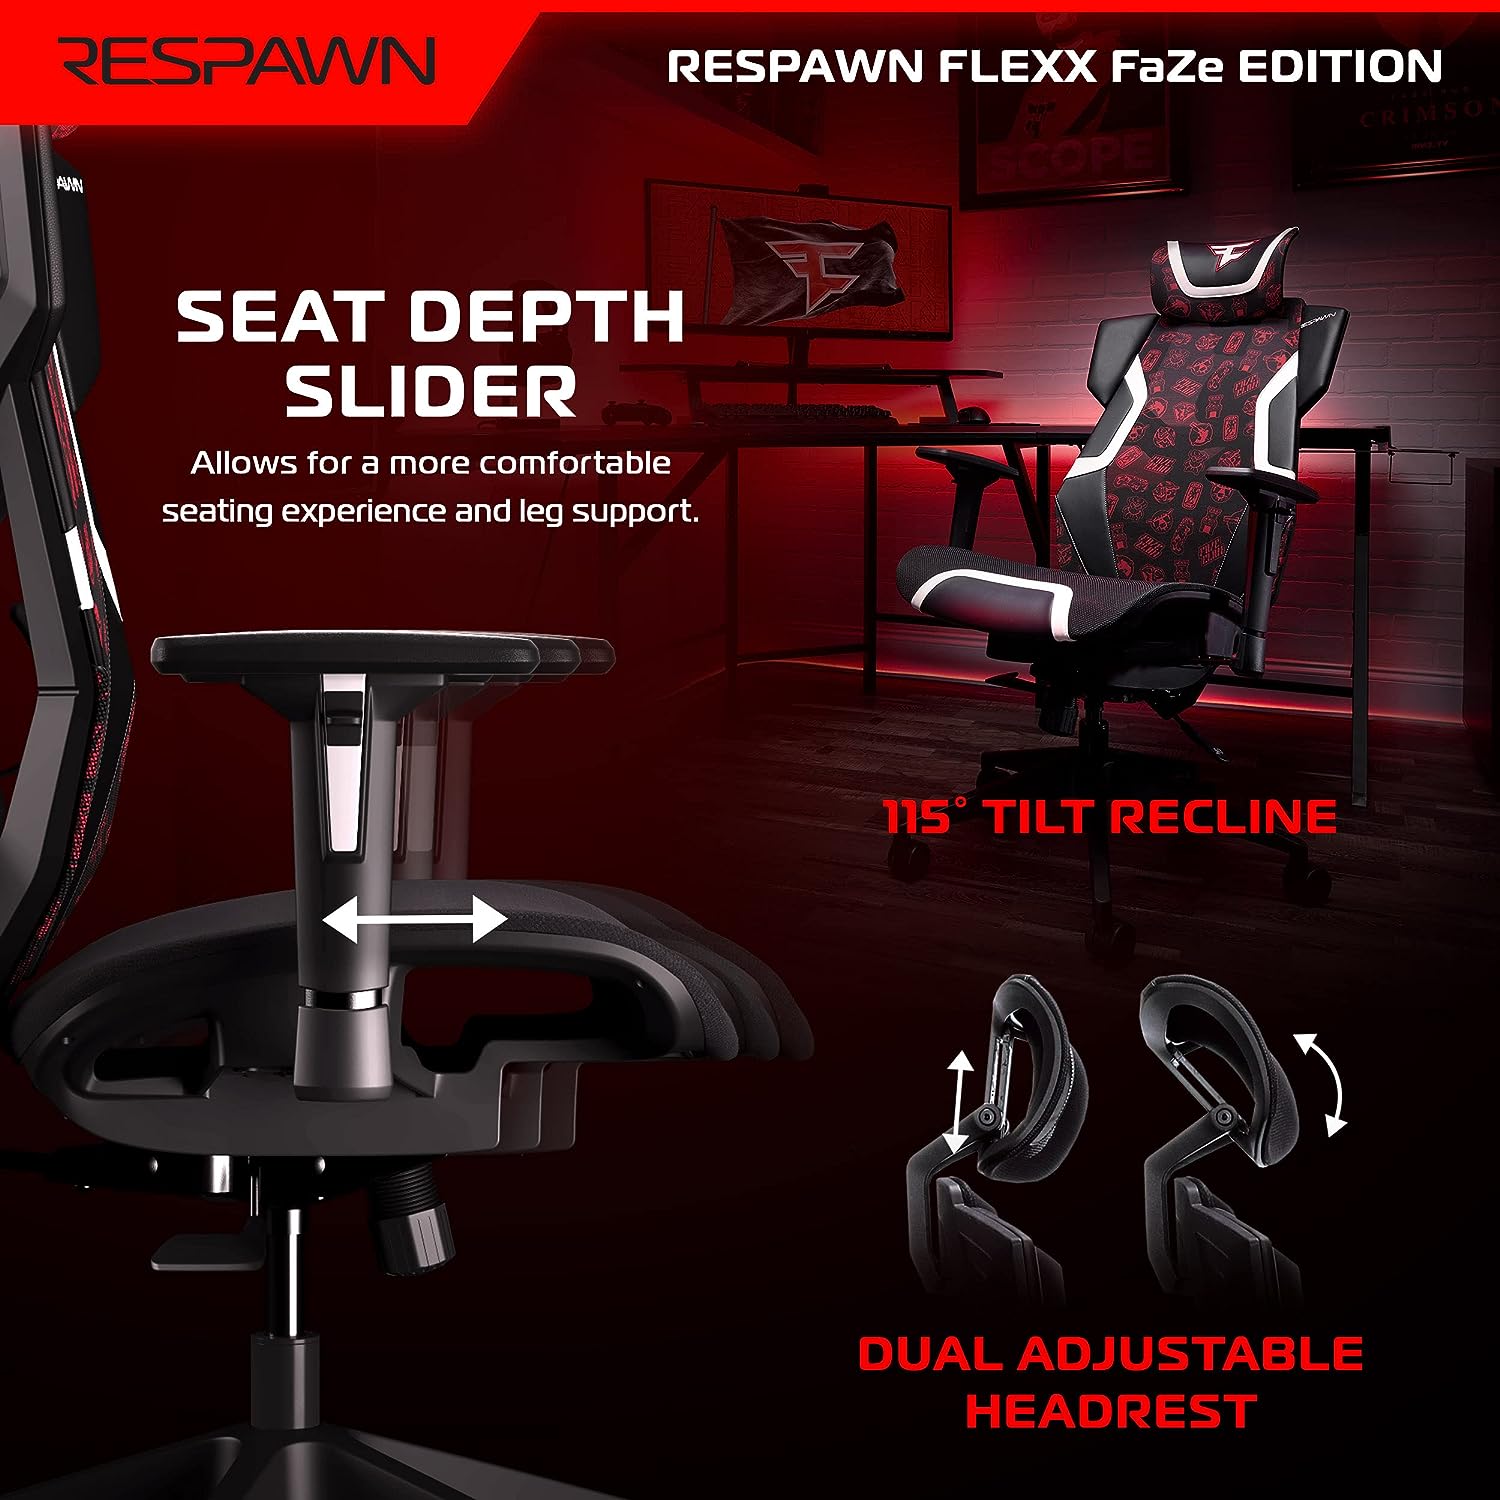 RESPAWN FLEXX Gaming Chair Review